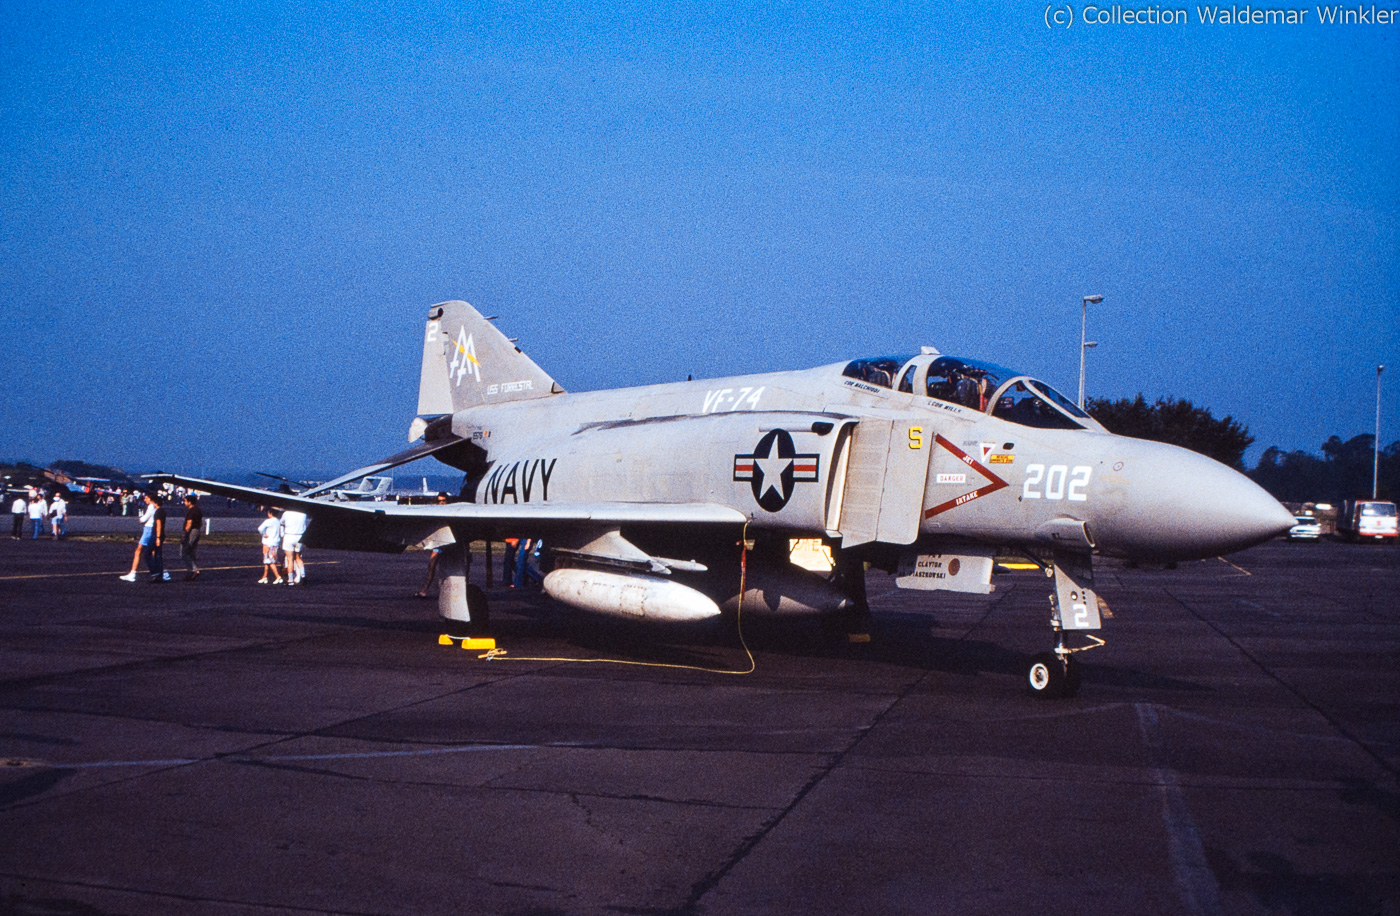 F-4_Phantom_II_DSC_3208.jpg